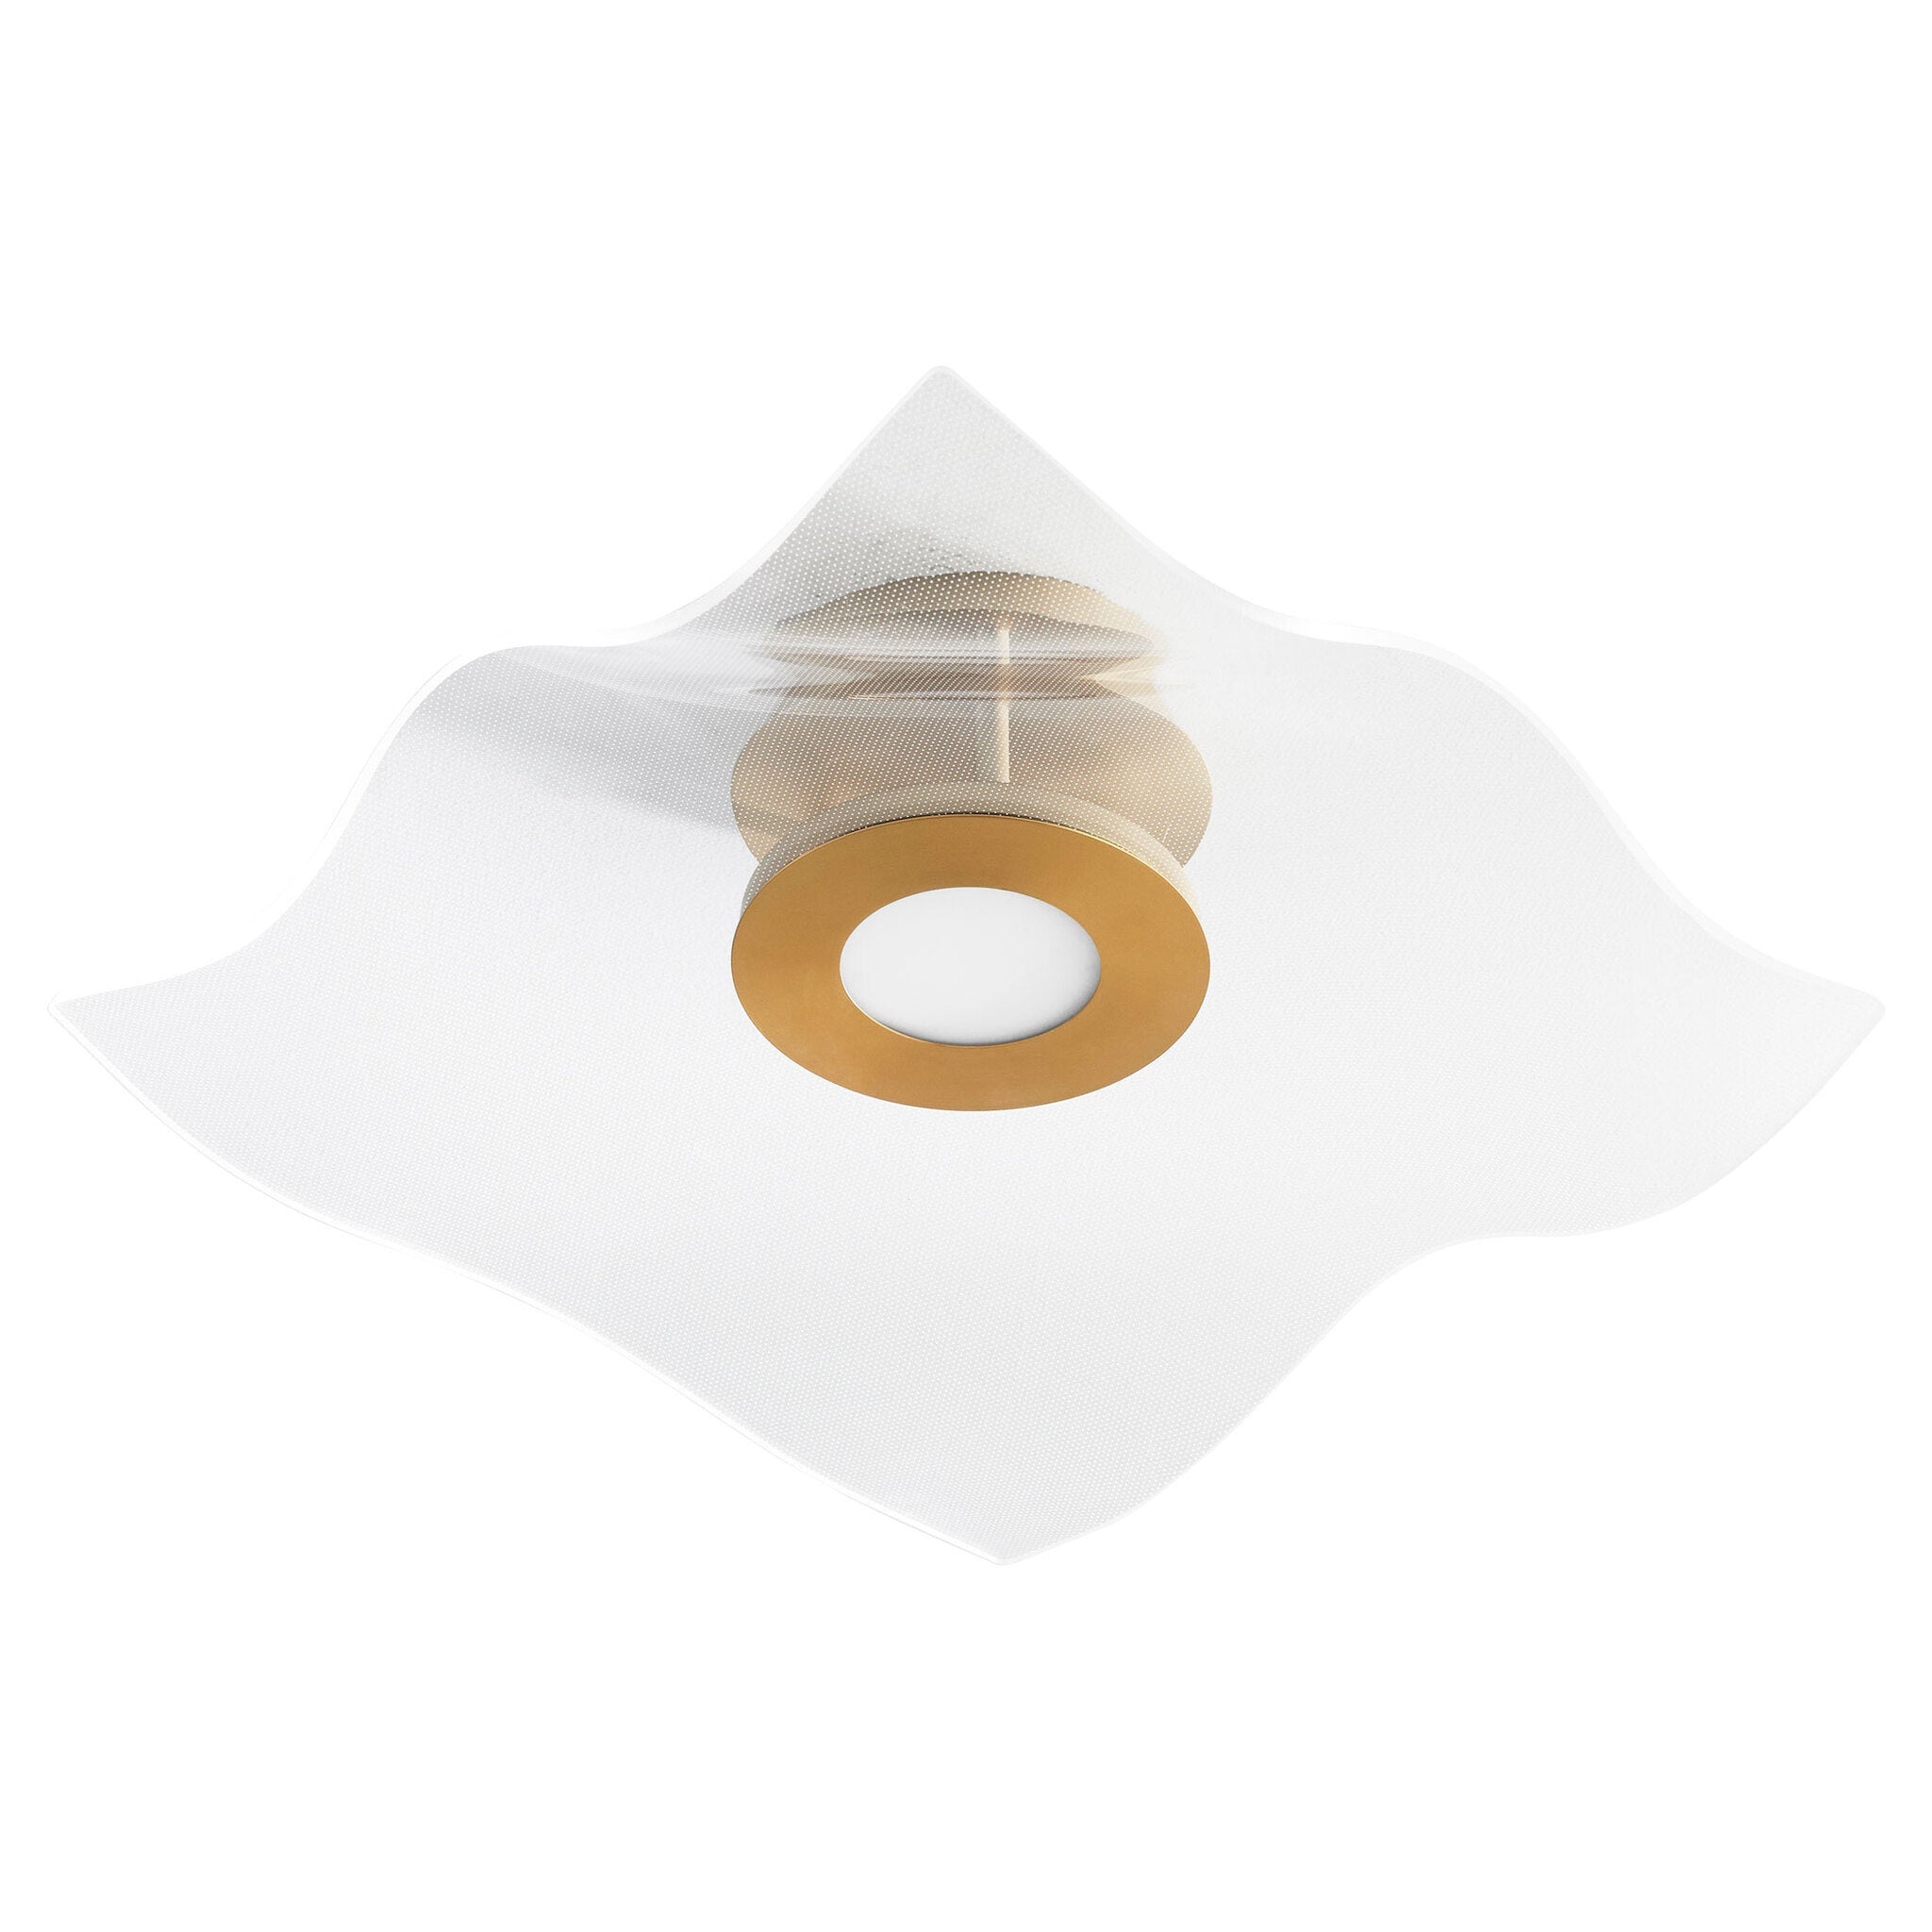 Oxygen MEDUSA Ceiling Mount Light Fixture - 3-807-40 Aged Brass, 3-807-15 Black